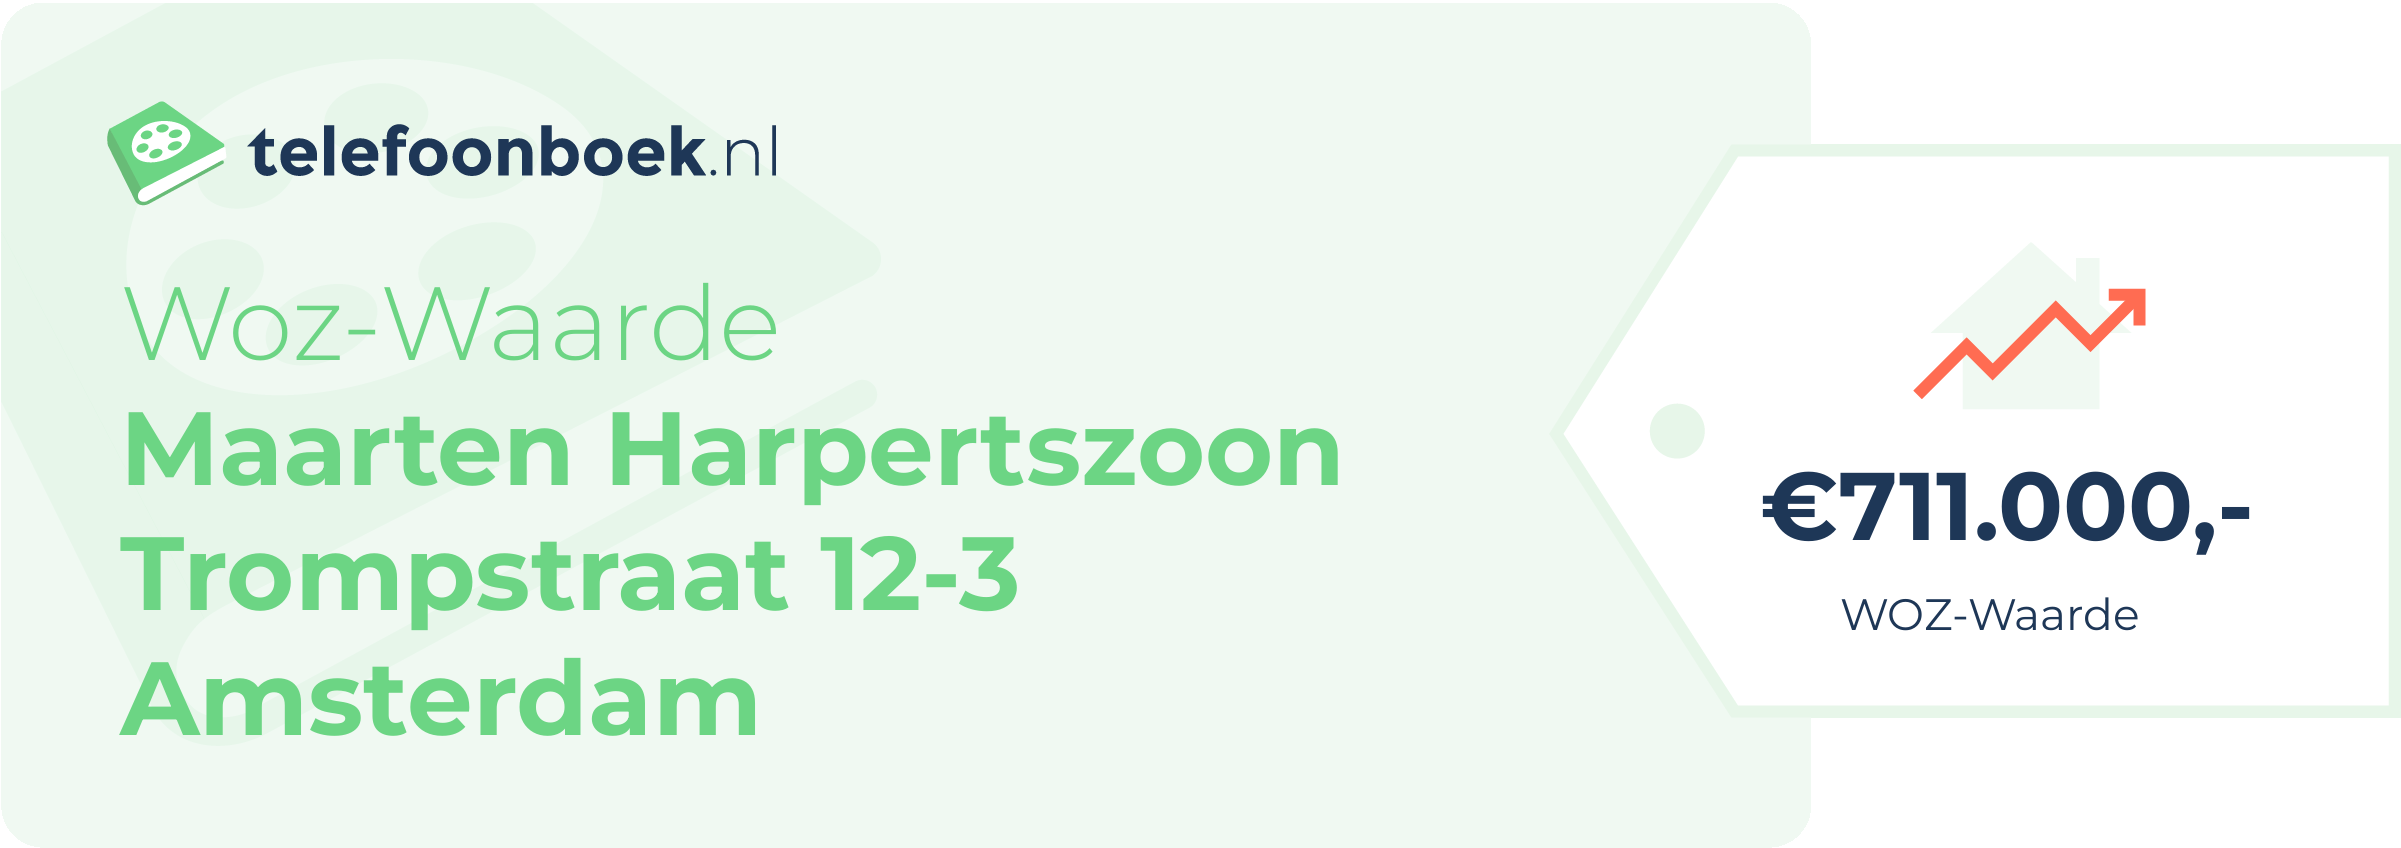 WOZ-waarde Maarten Harpertszoon Trompstraat 12-3 Amsterdam